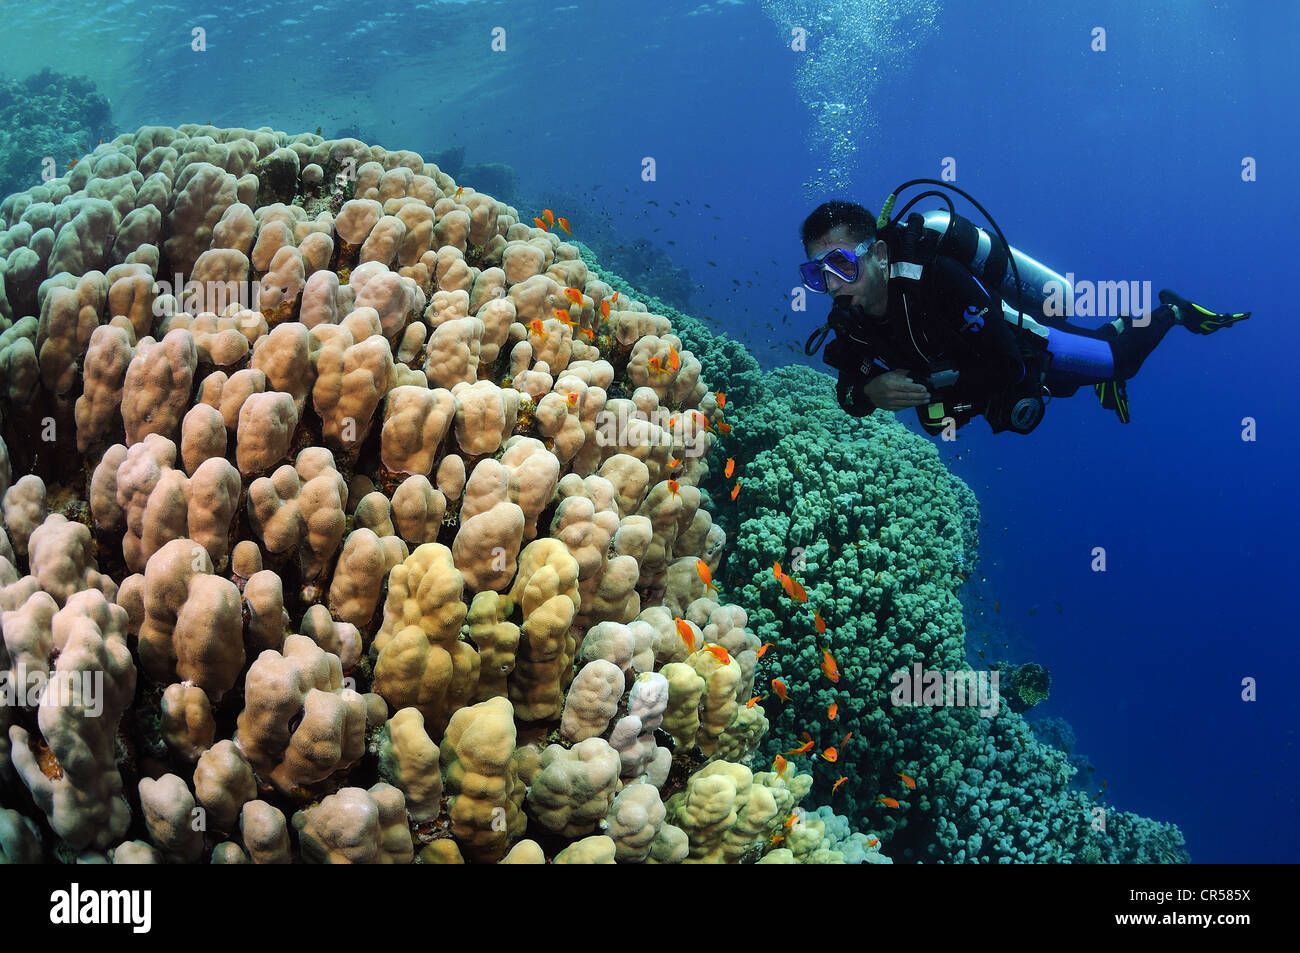 Egypt, Red Sea, porites corals (Porites sp.) Stock Photo